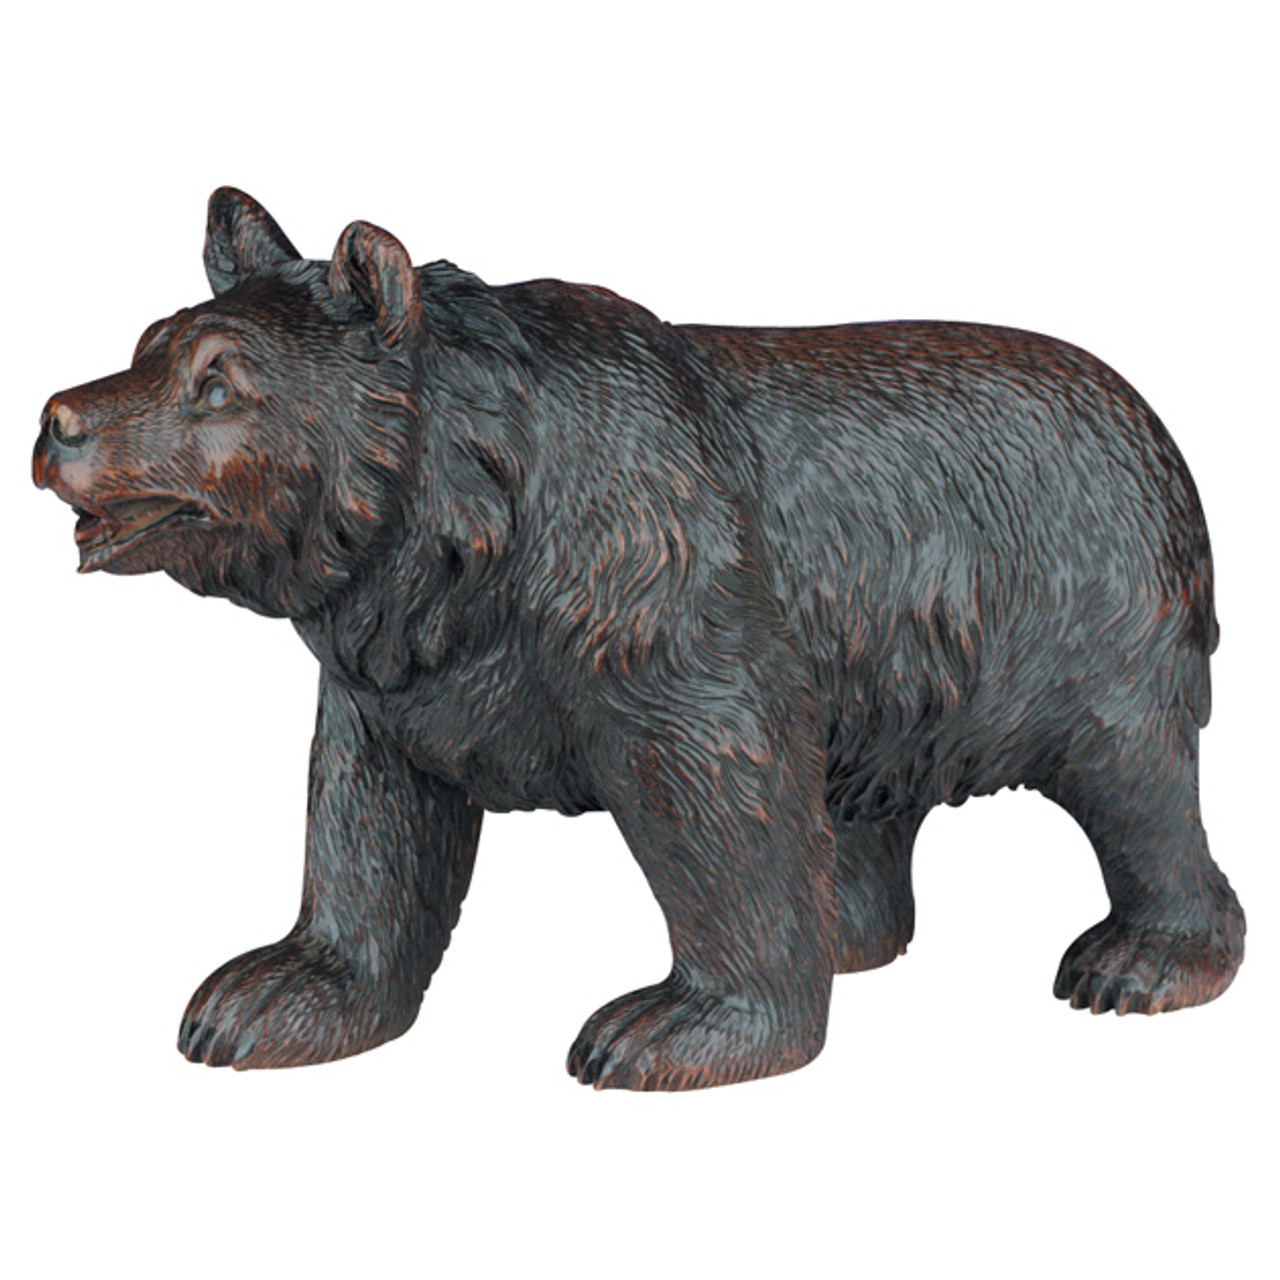 Cabin Decor: Relaxed Bear Sculpture | Black Forest Decor